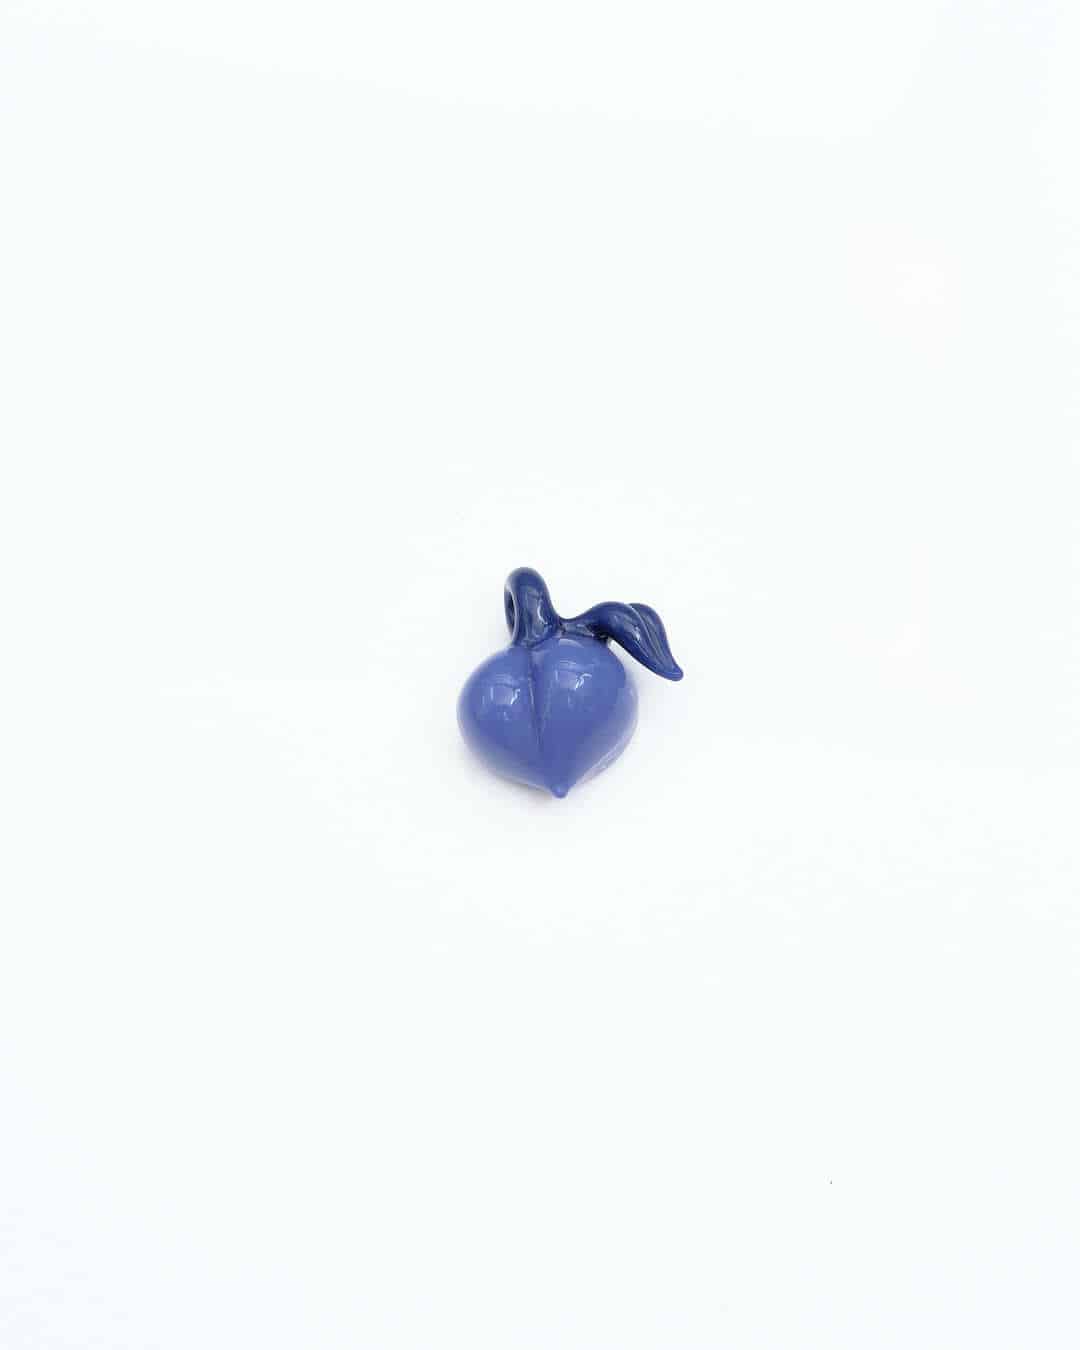 innovative glass pendant - (27C) Indigo Peach w/ Dark Blue Stem Pendant by Gnarla Carla